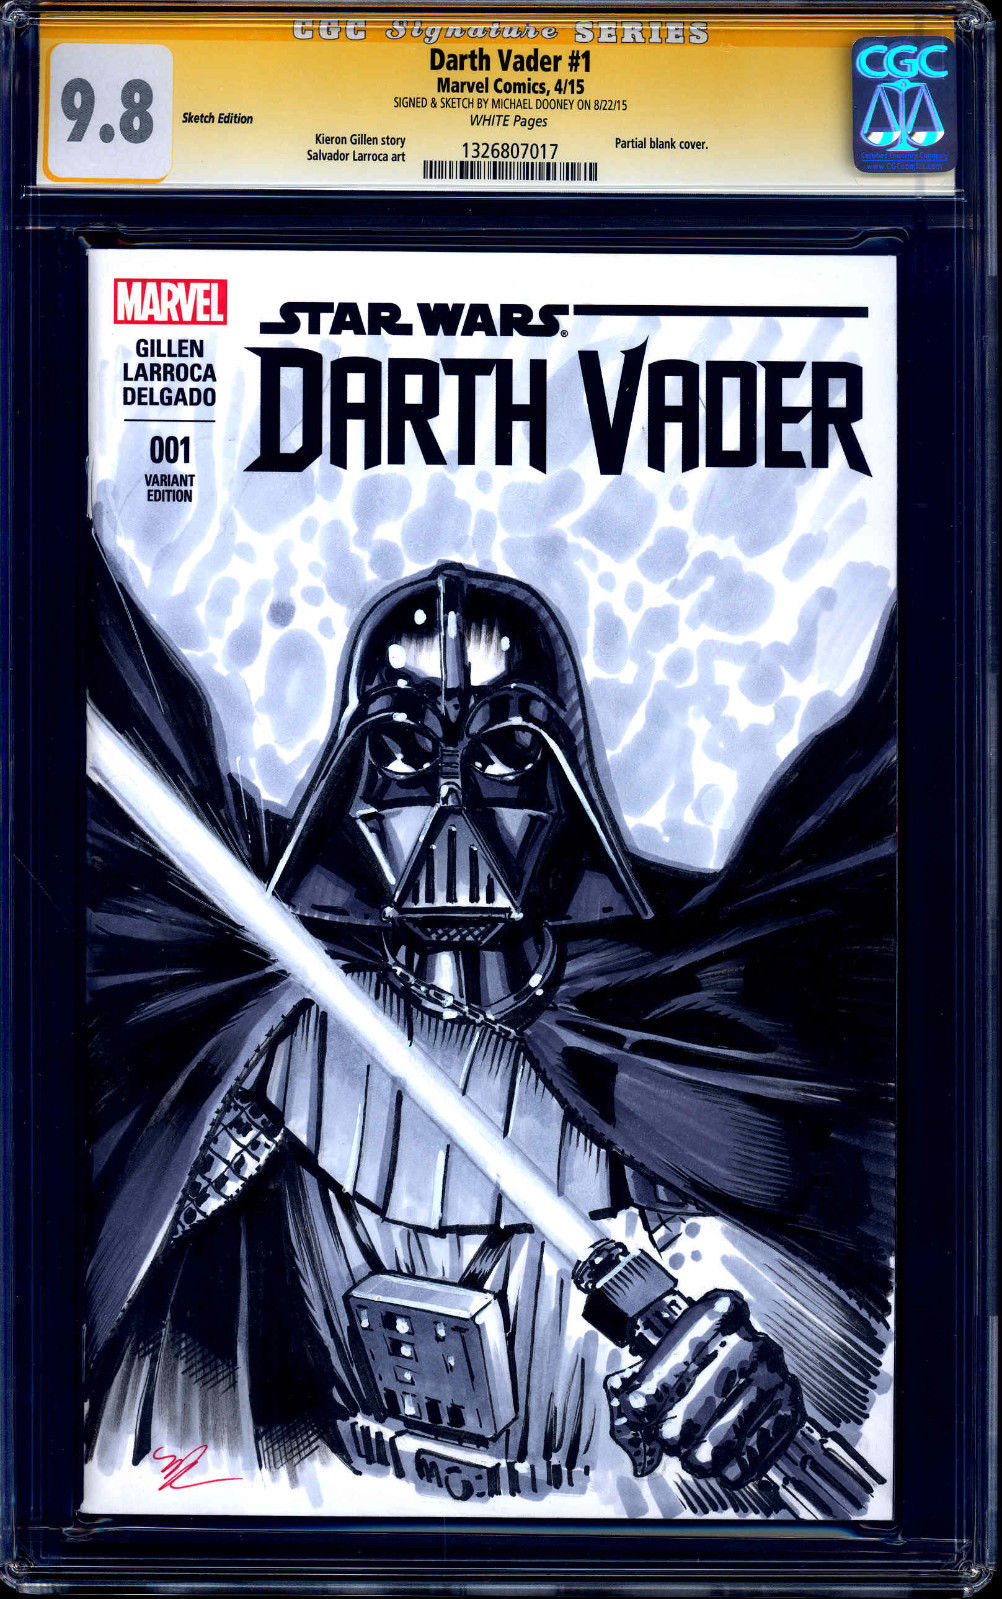 Darth Vader comic cover